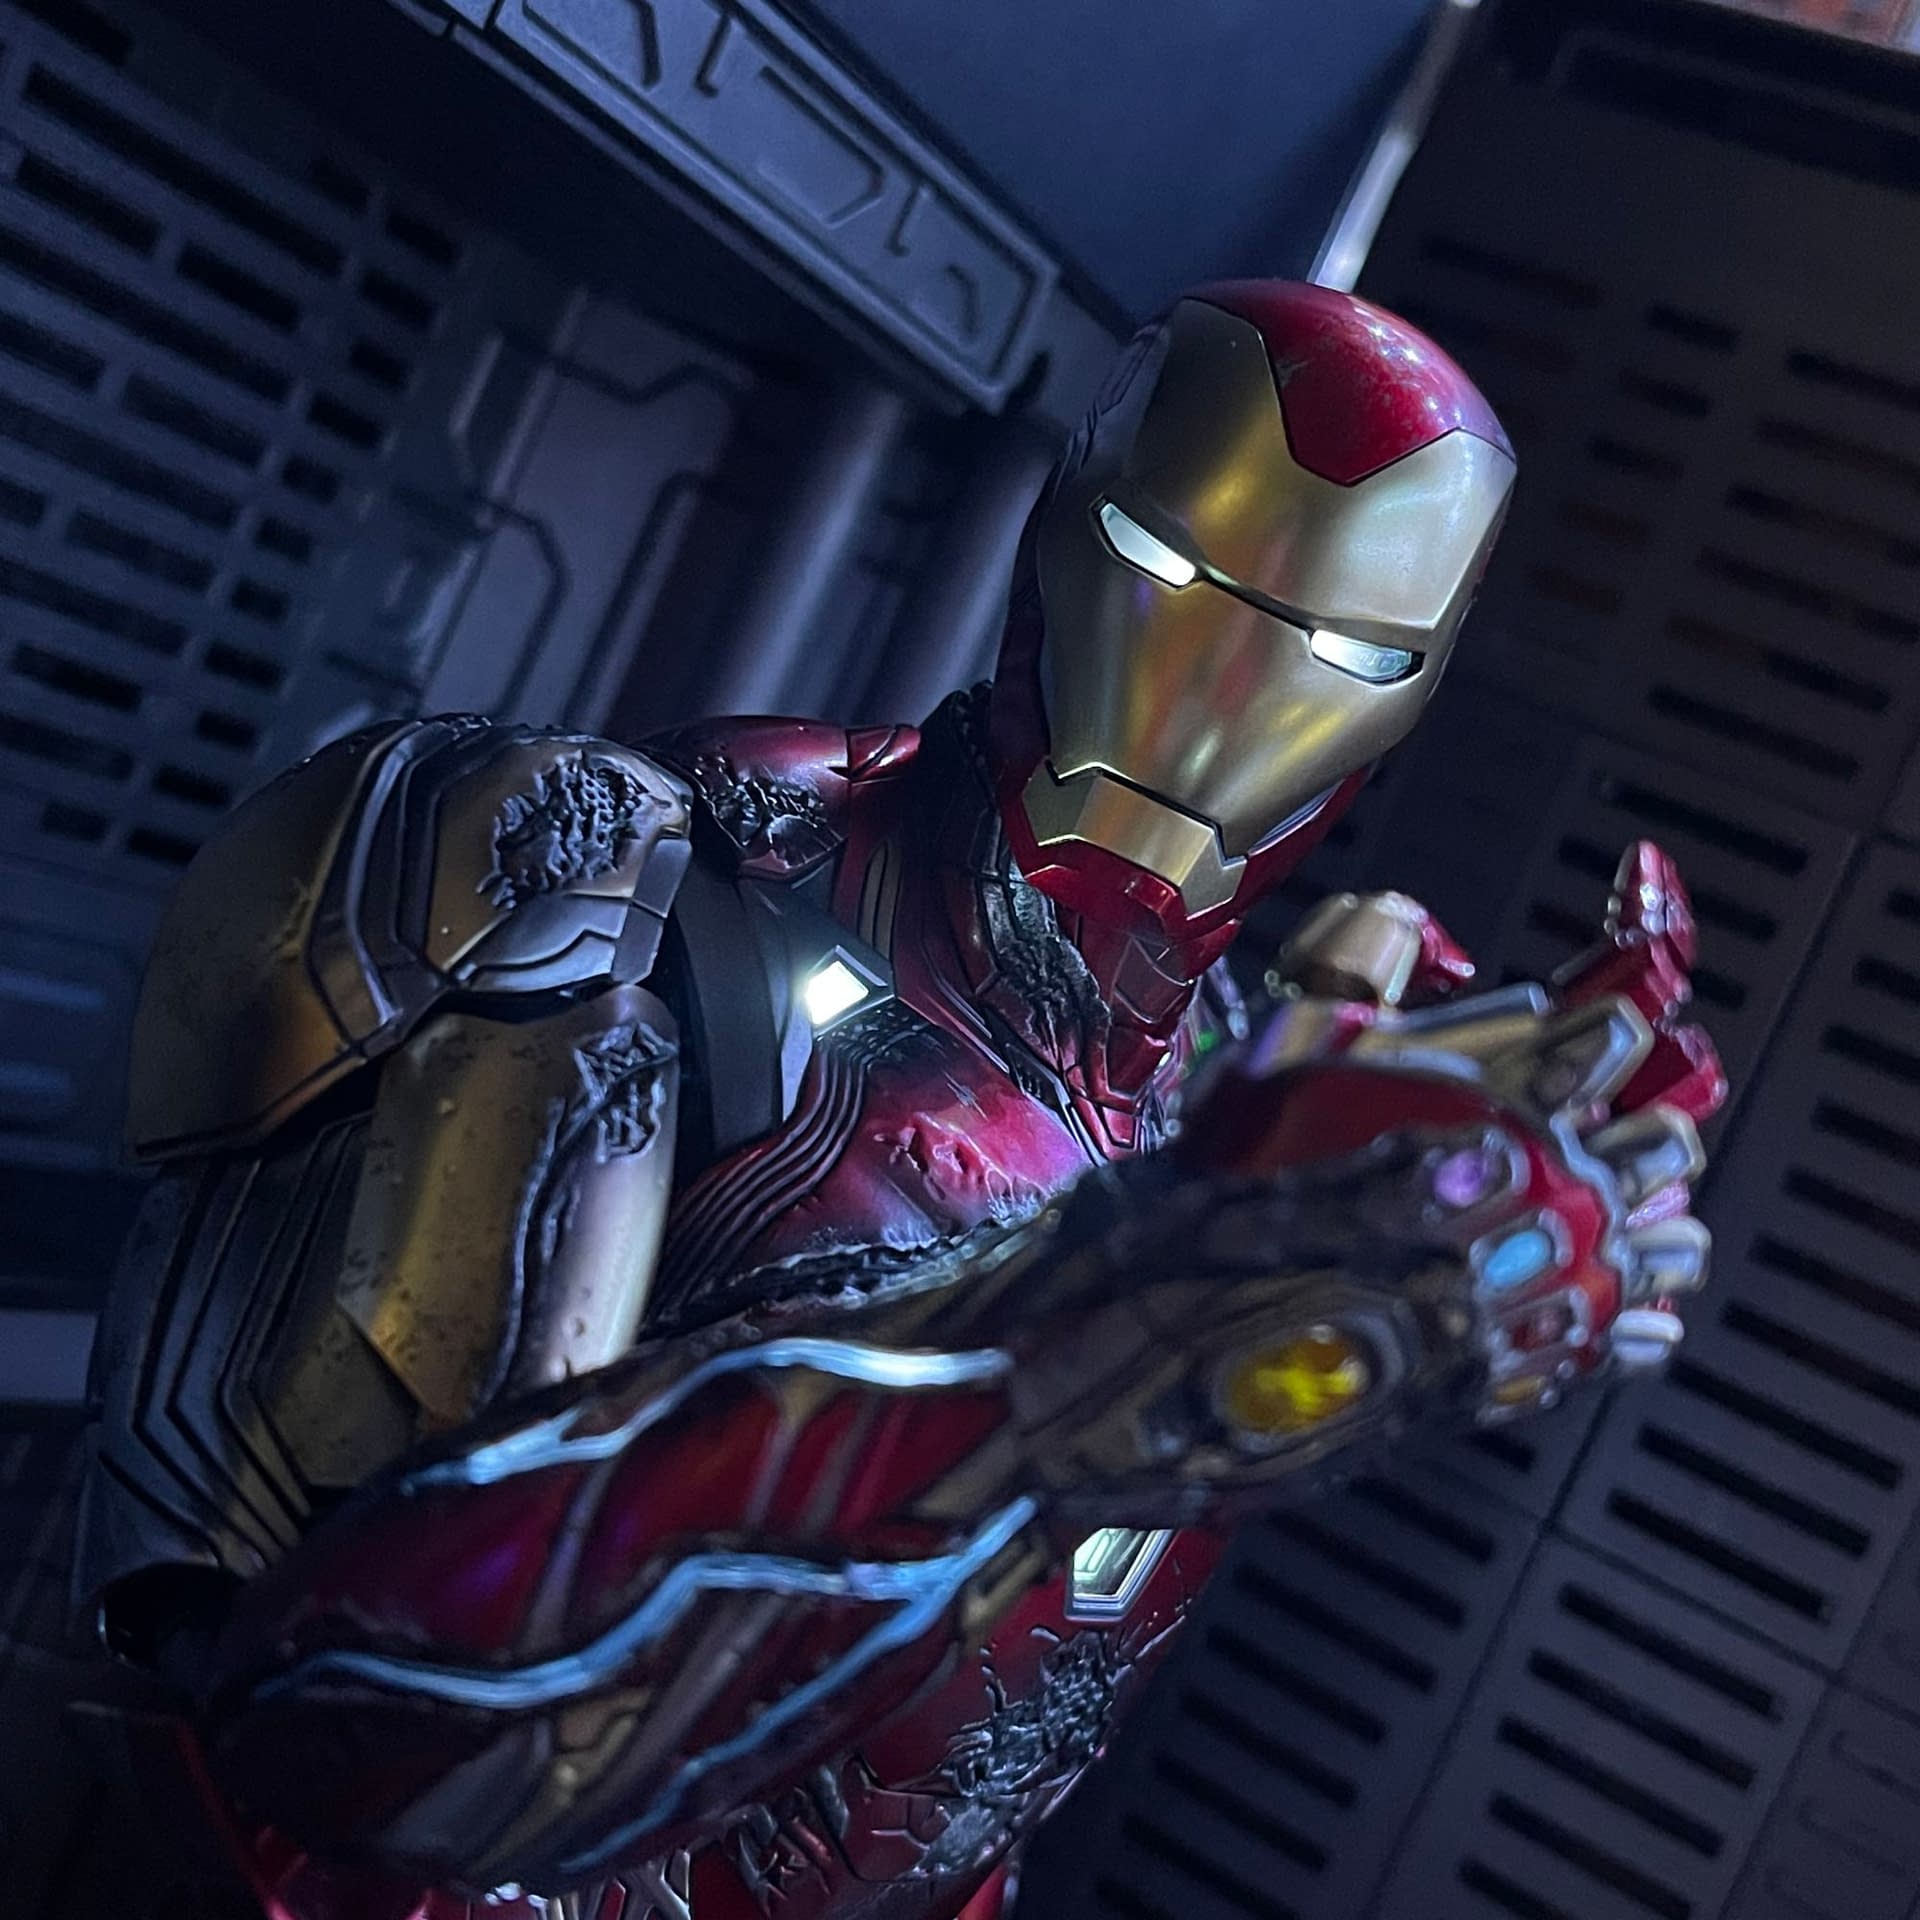 Avengers: Endgame Hot Toys Iron Man Mark LXXXV - We Love You 3000